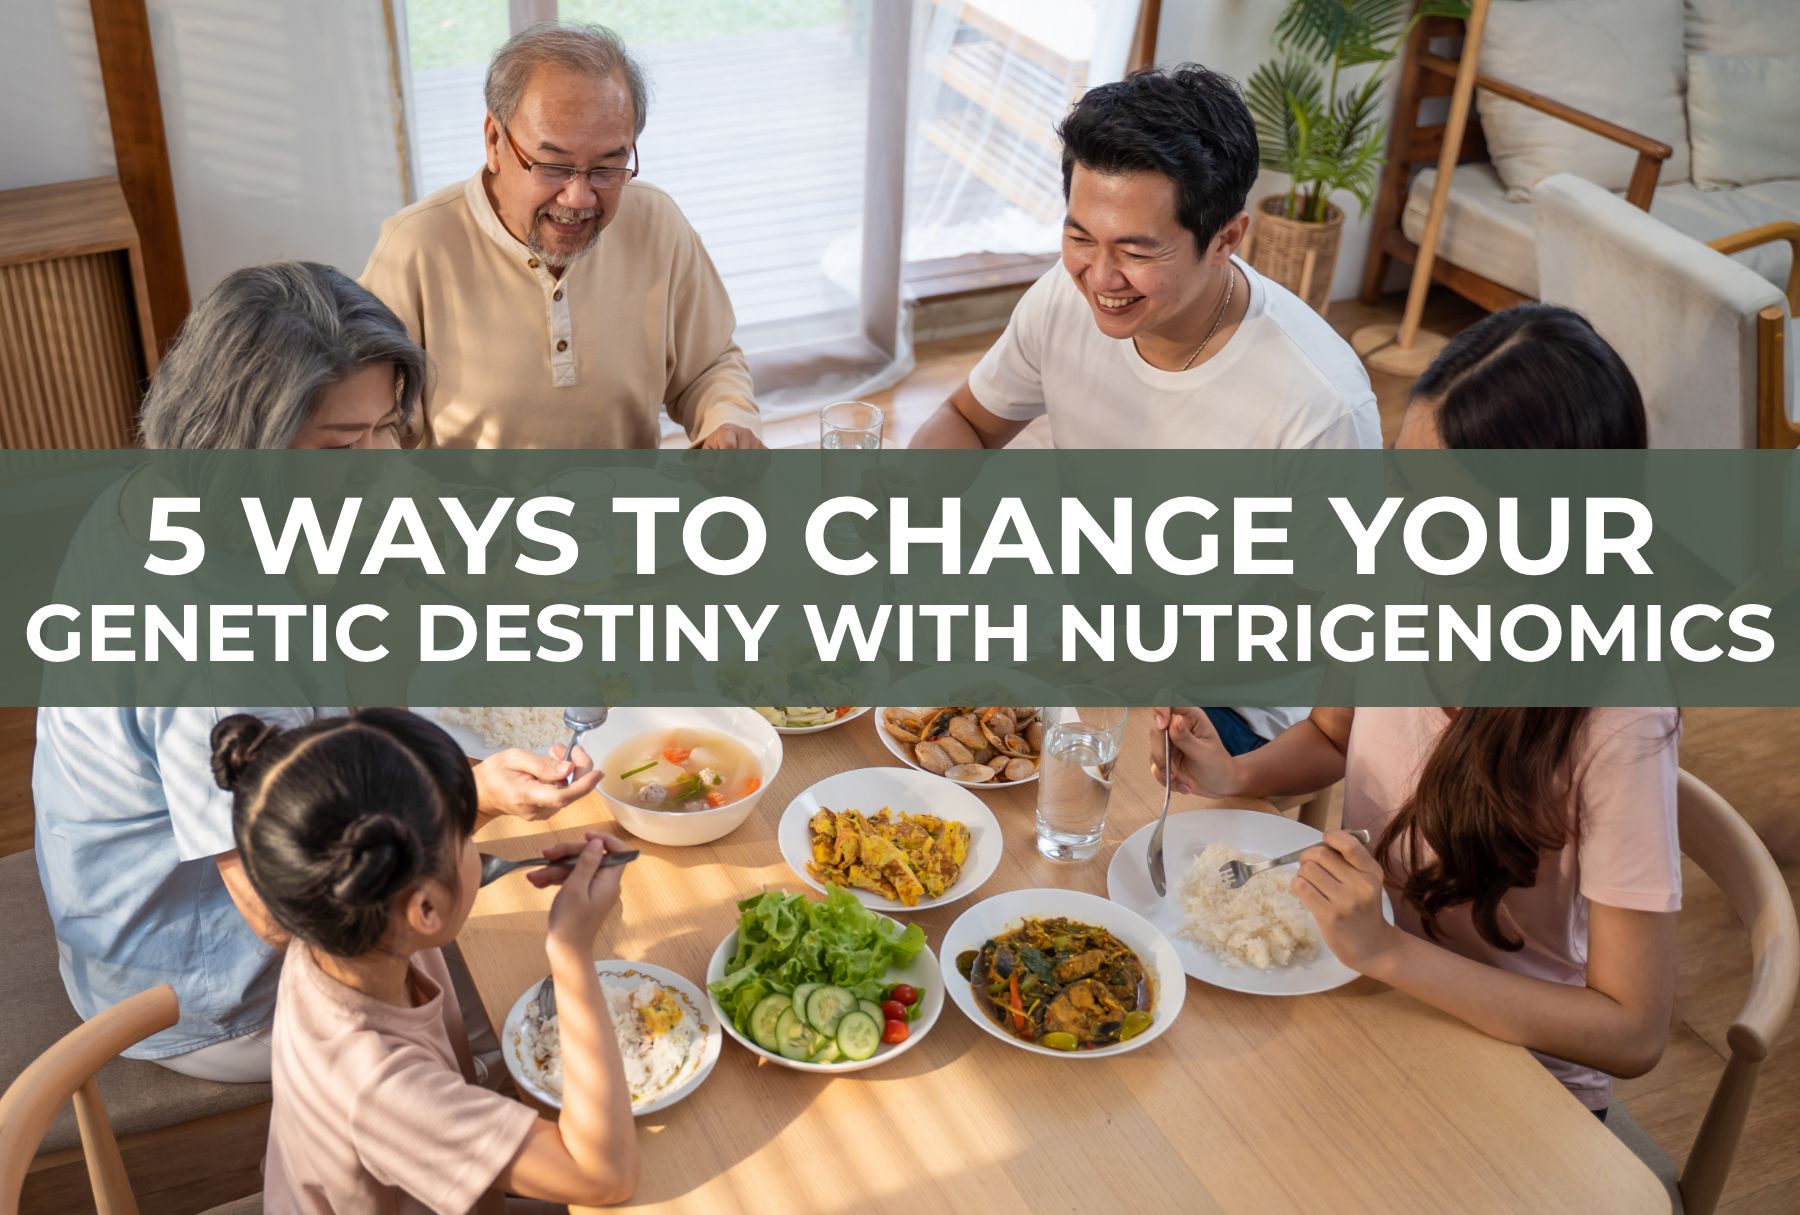 5 Ways to Change Your Genetic Destiny with Nutrigenomics